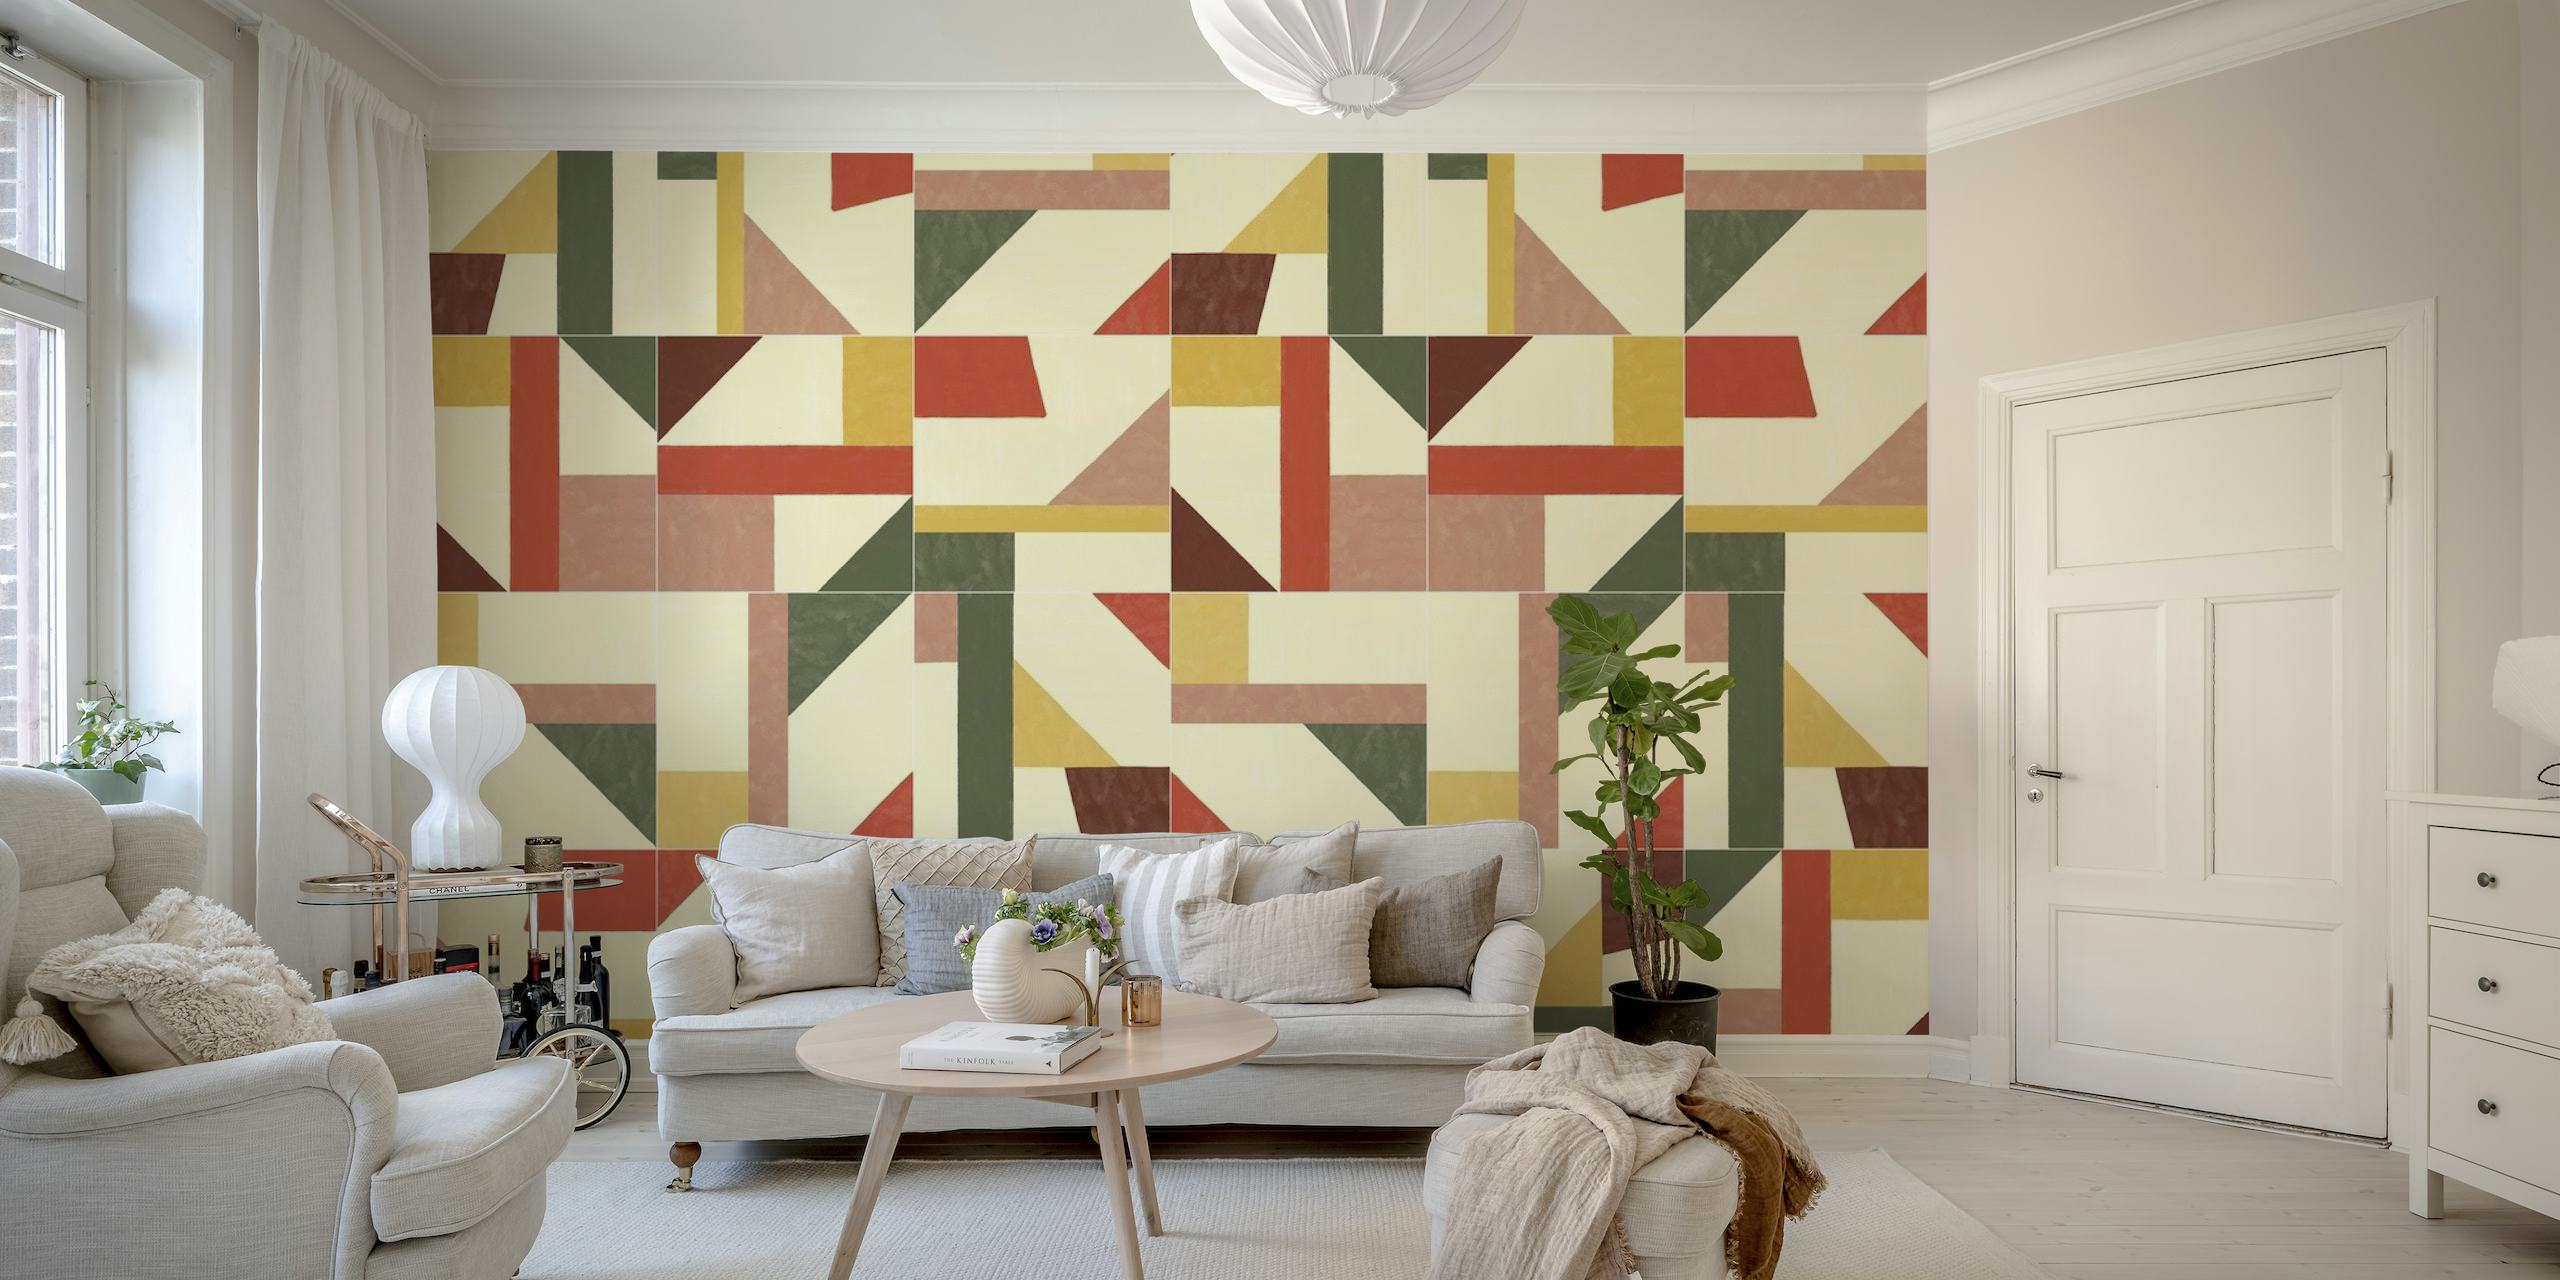 Tangram Wall Tiles Two papel pintado